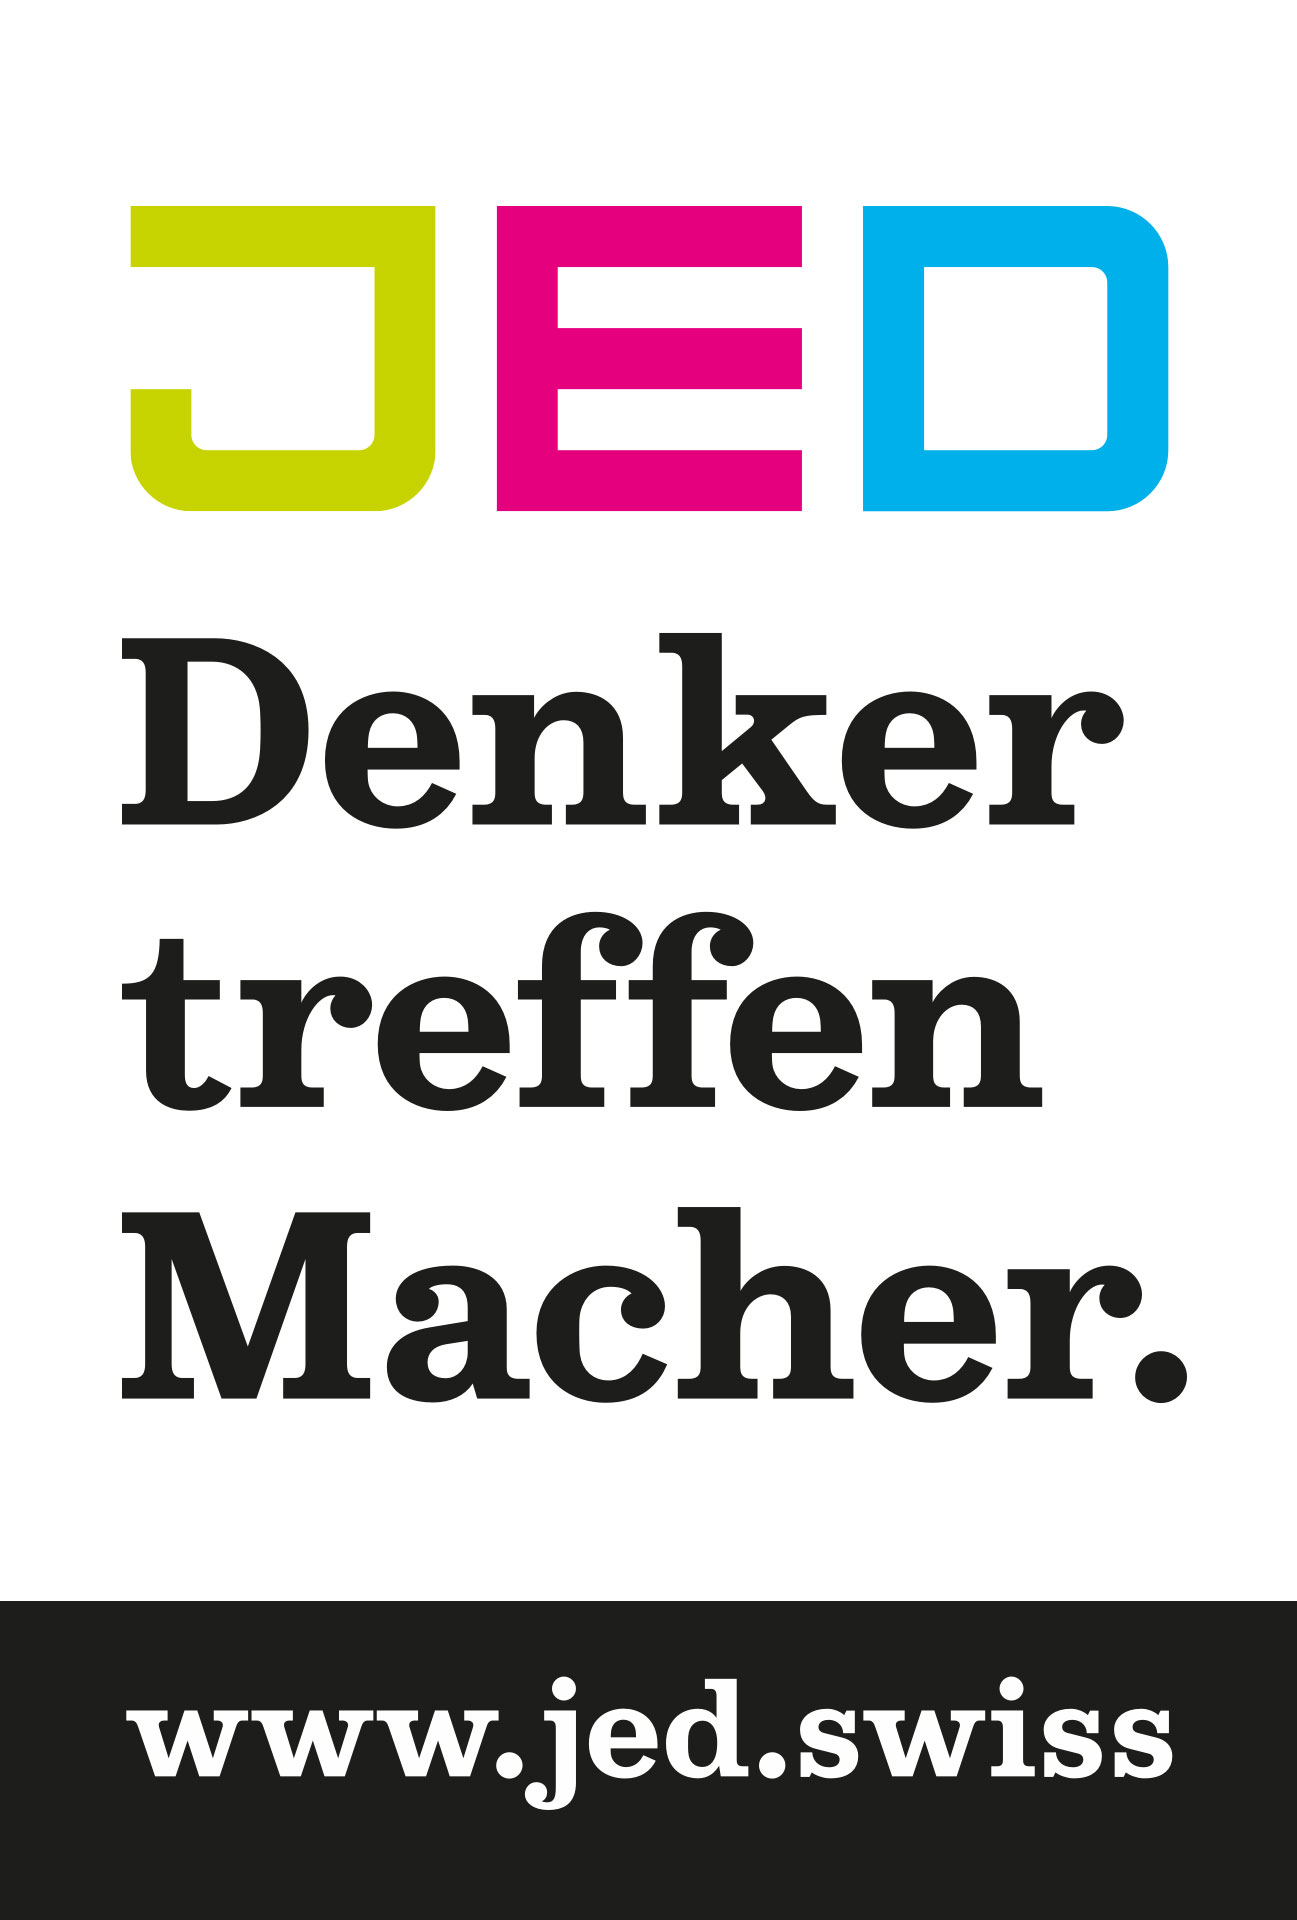 Abbildung: Swiss Prime Site – JED Business-Hub. Plakat: Denker treffen Macher